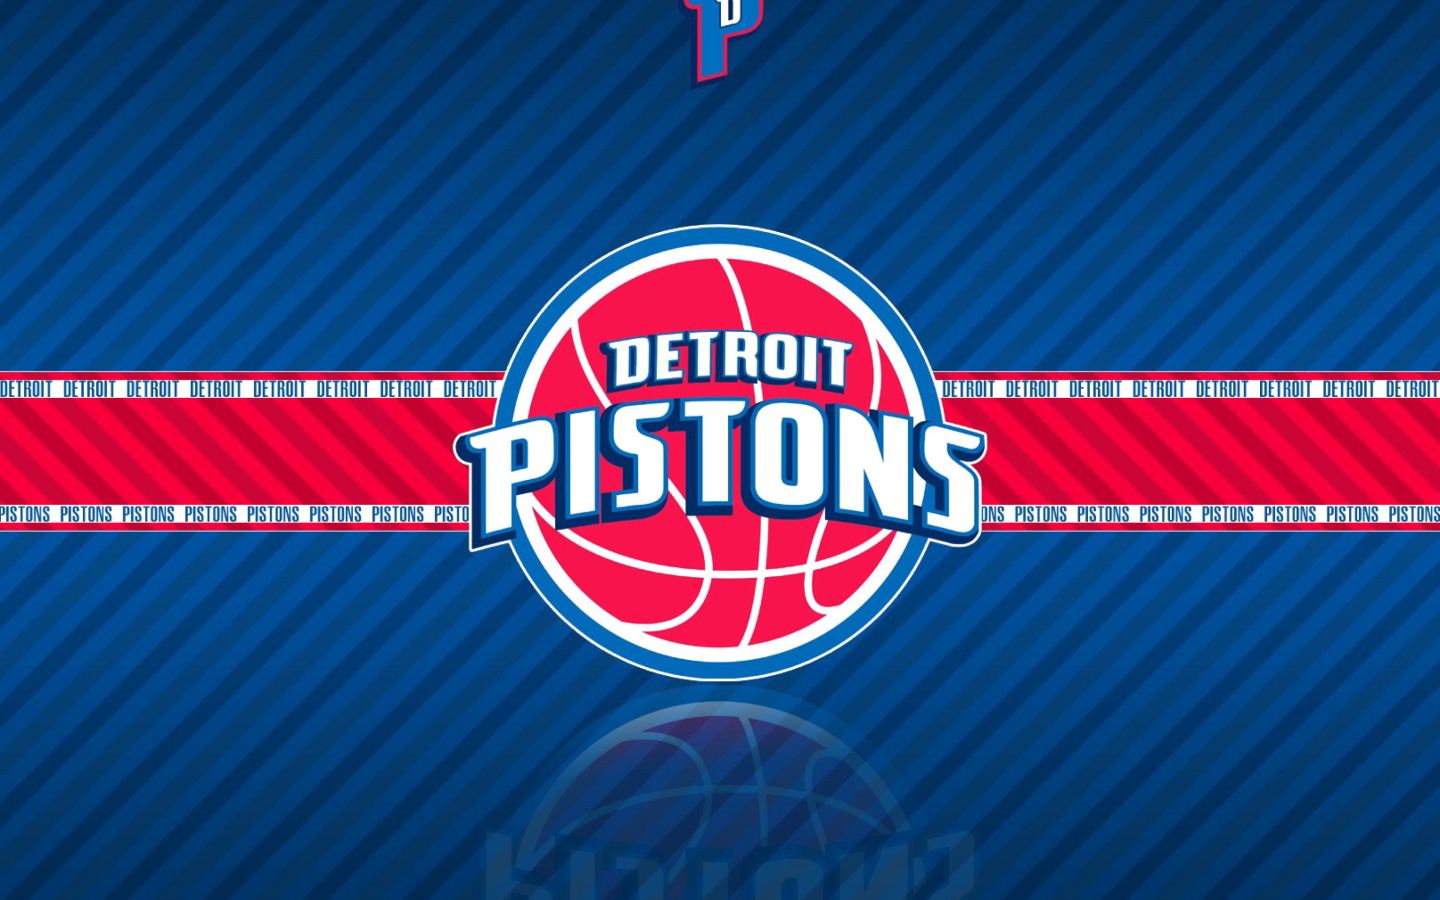 Detroit Pistons wallpaper 1440x900